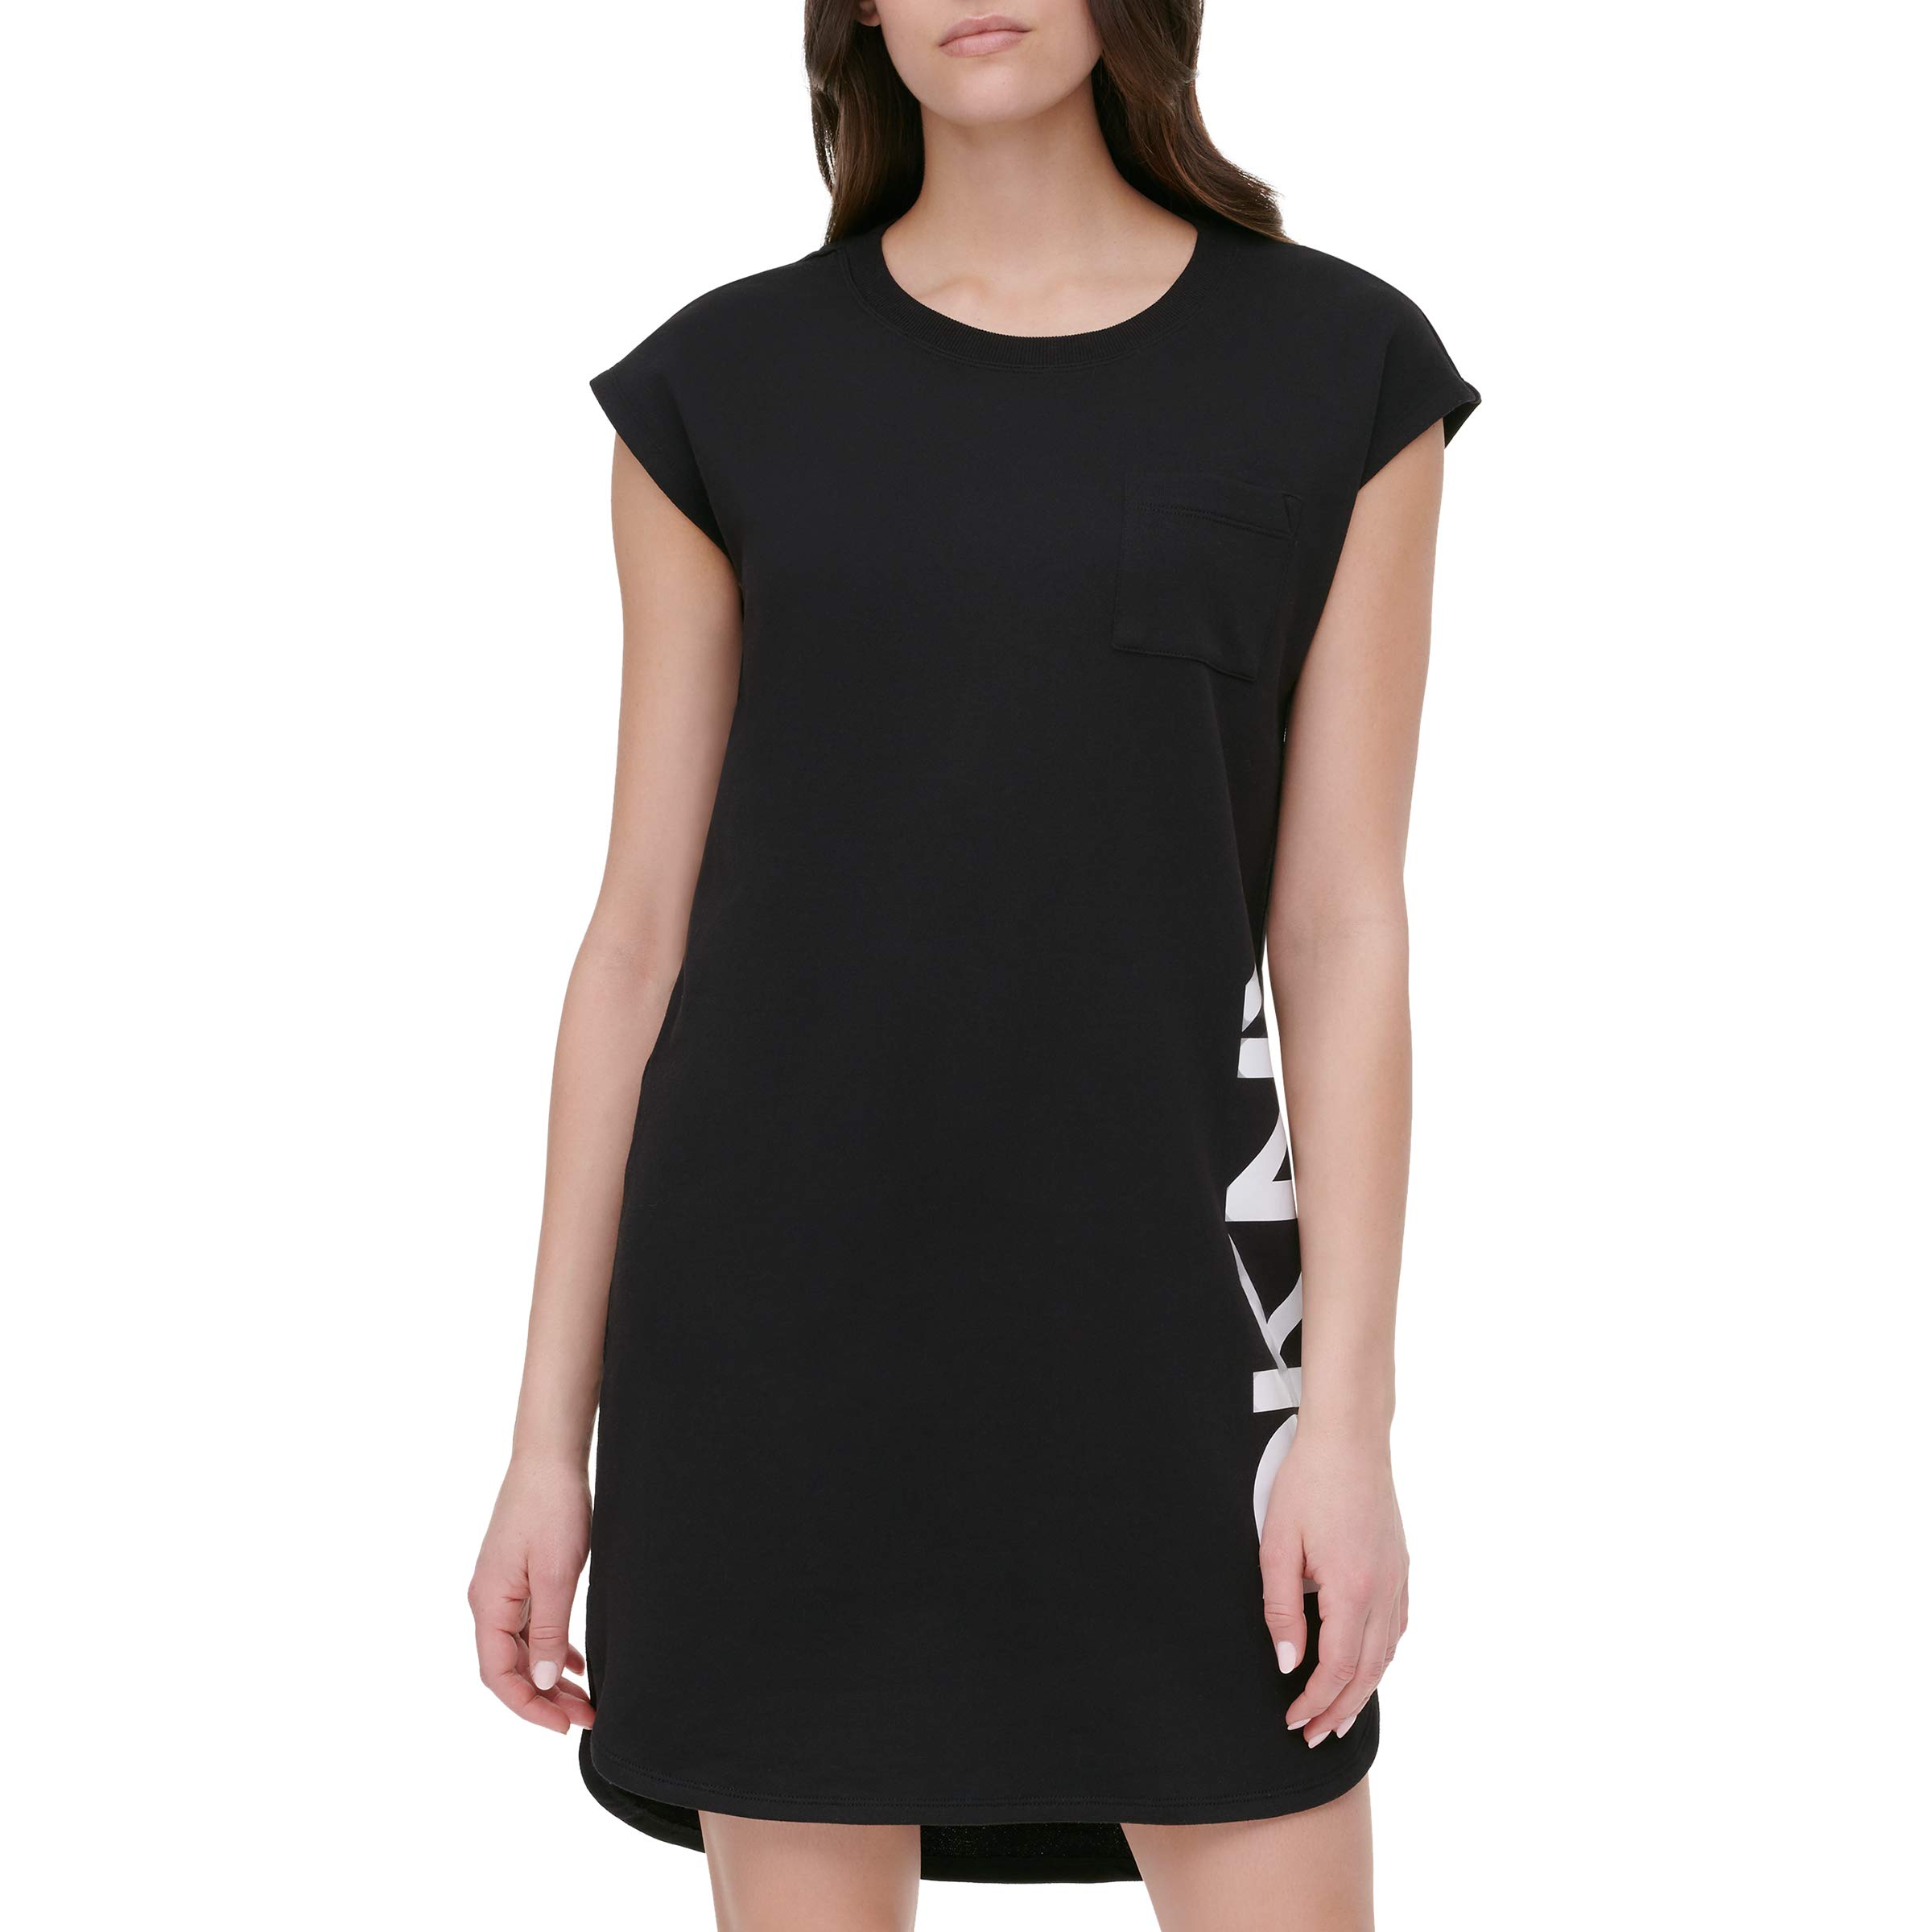 DKNY Women's Cap Sleeve Logo T-shirt Dress, Black, S